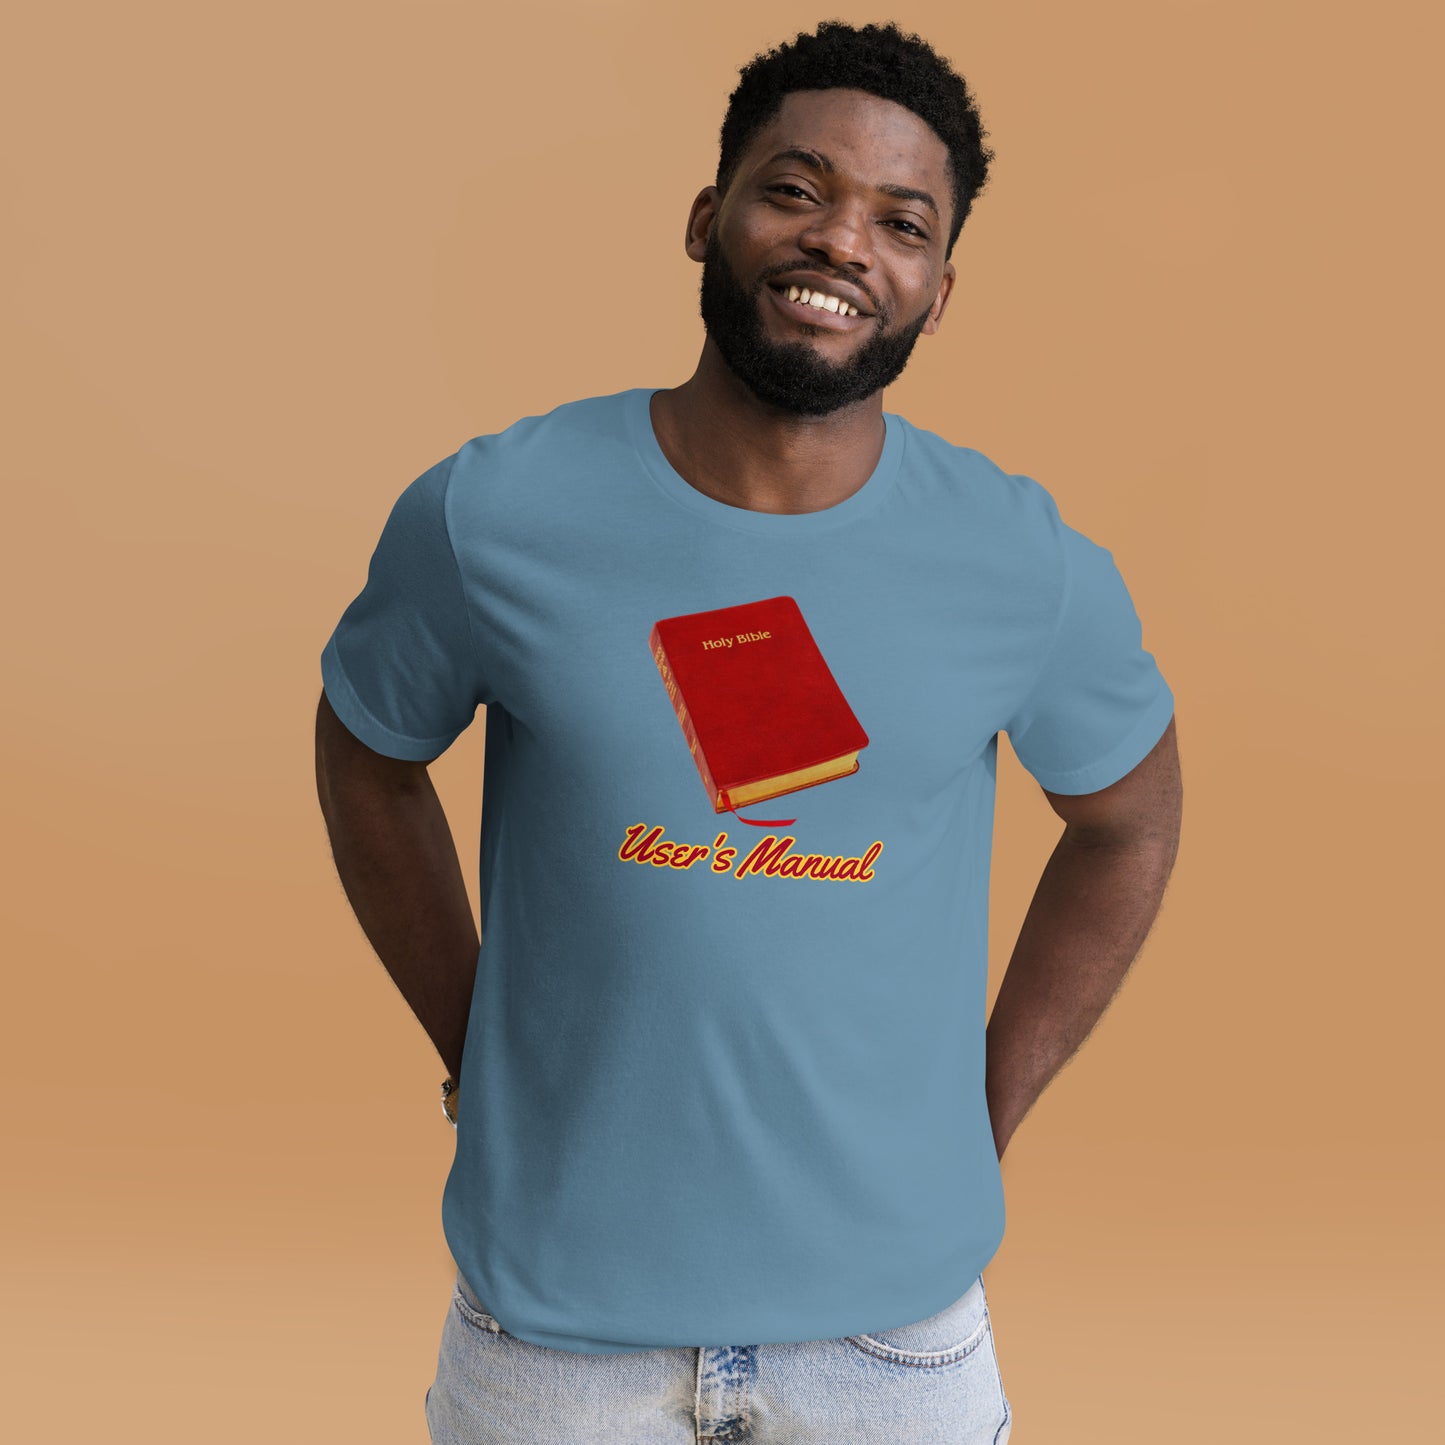 User's Manual Unisex t-shirt